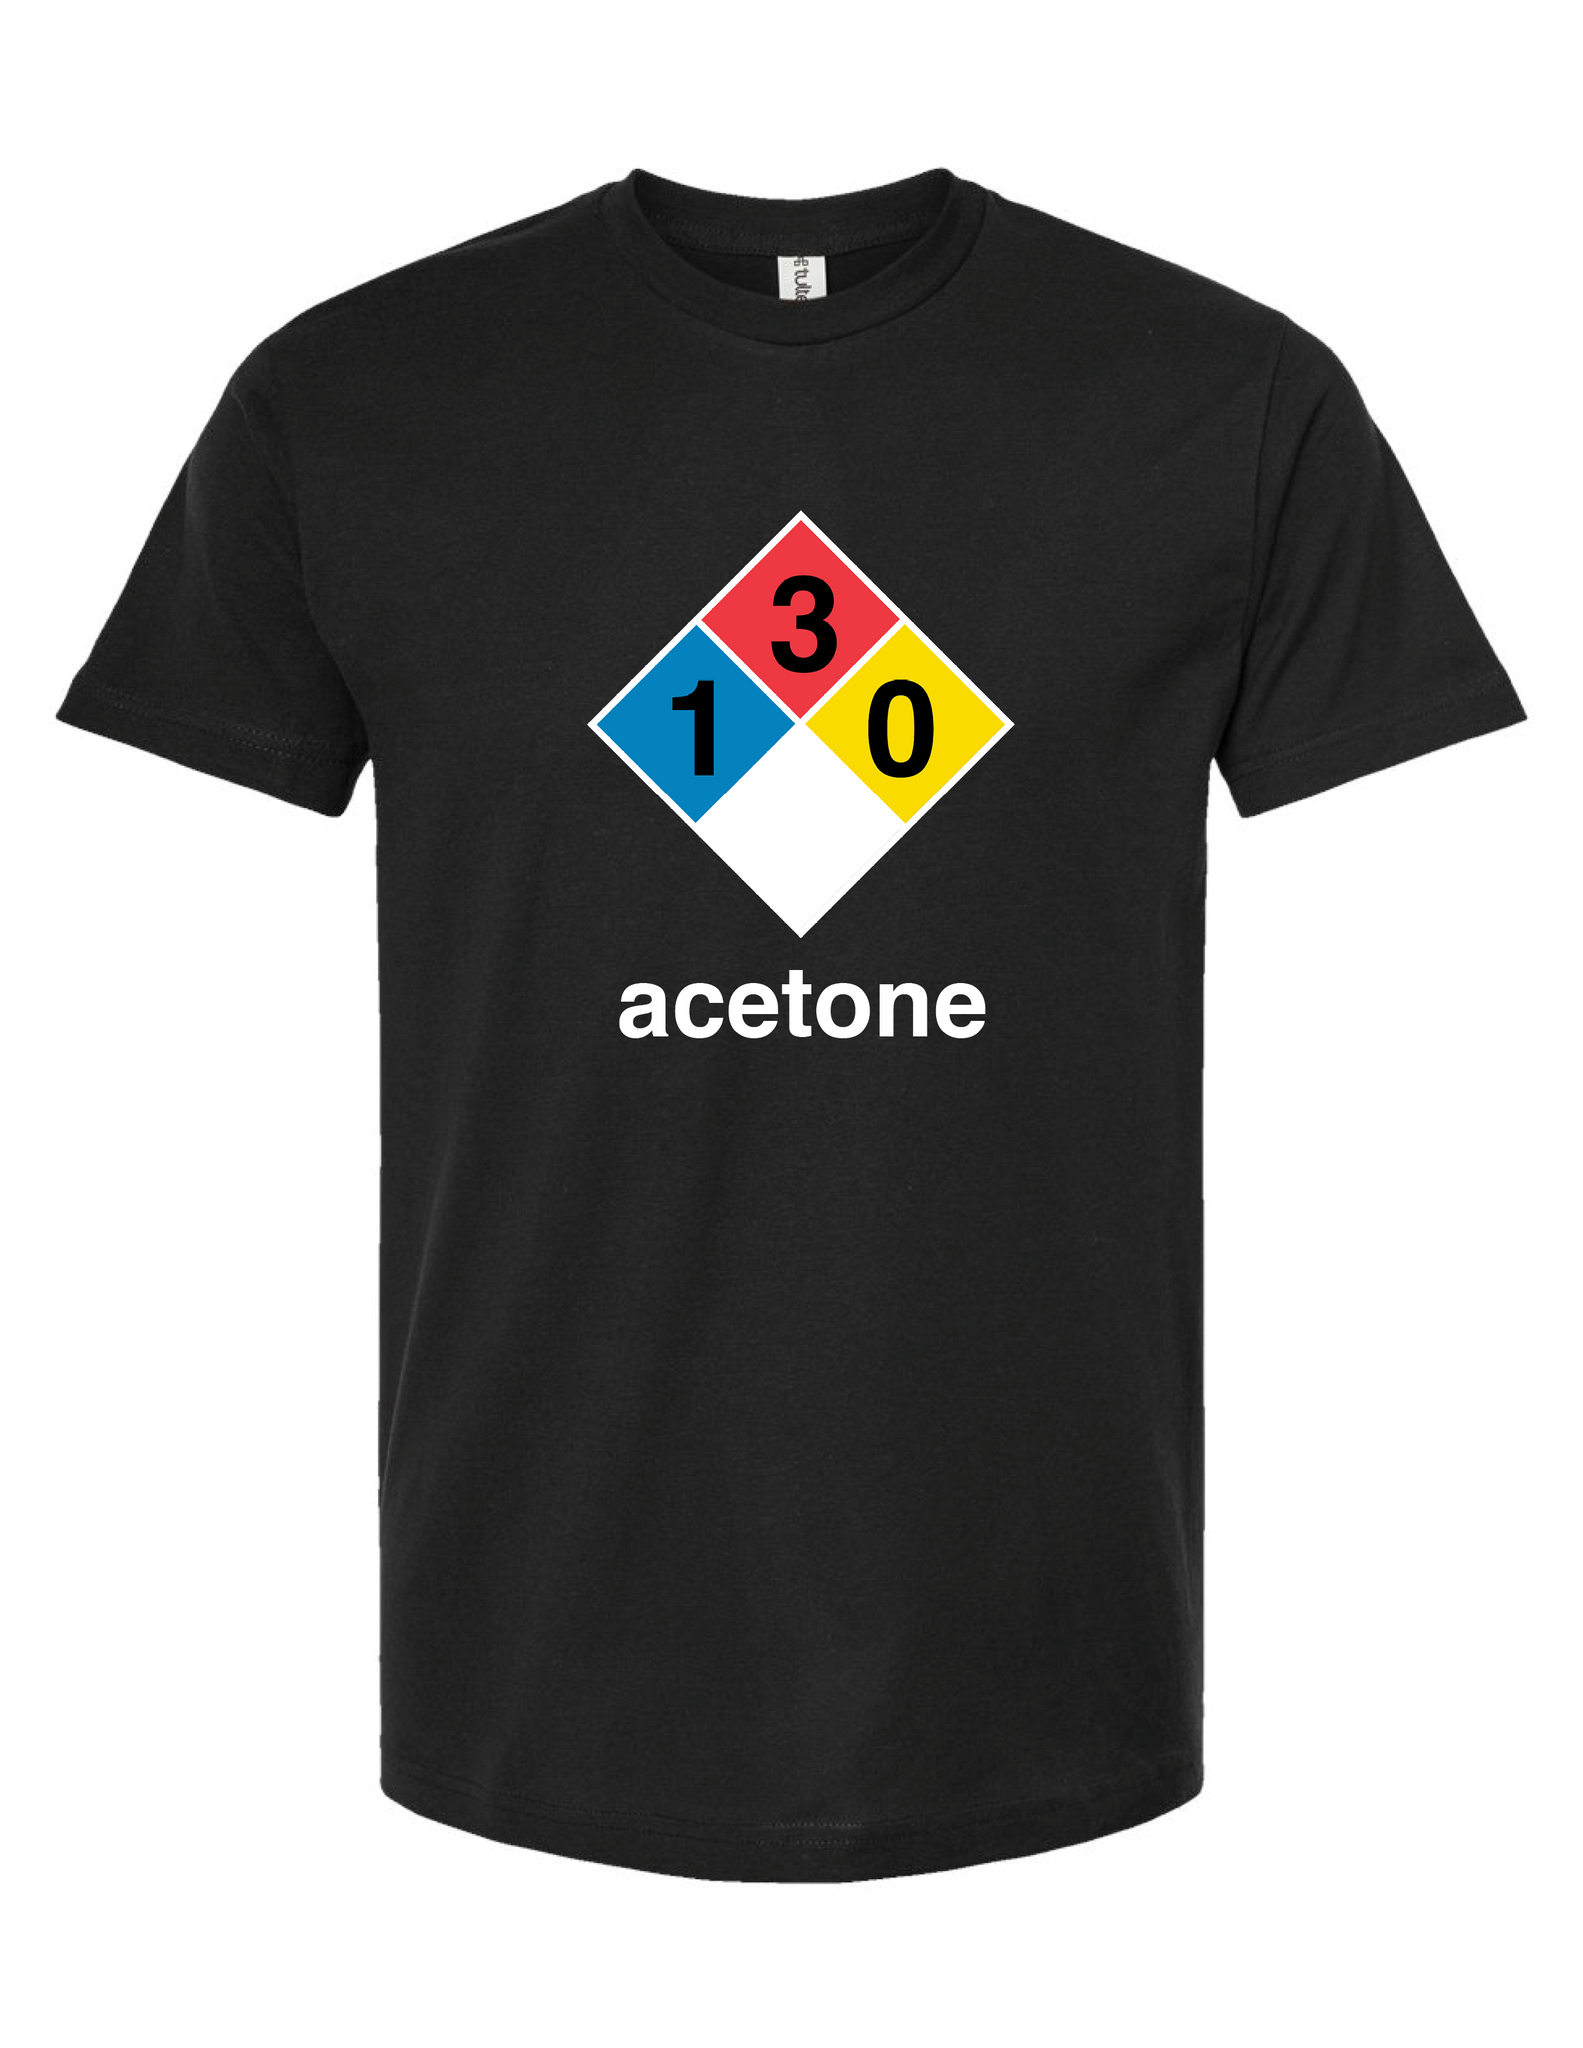 Acetone - I'm still waiting. T-Shirt